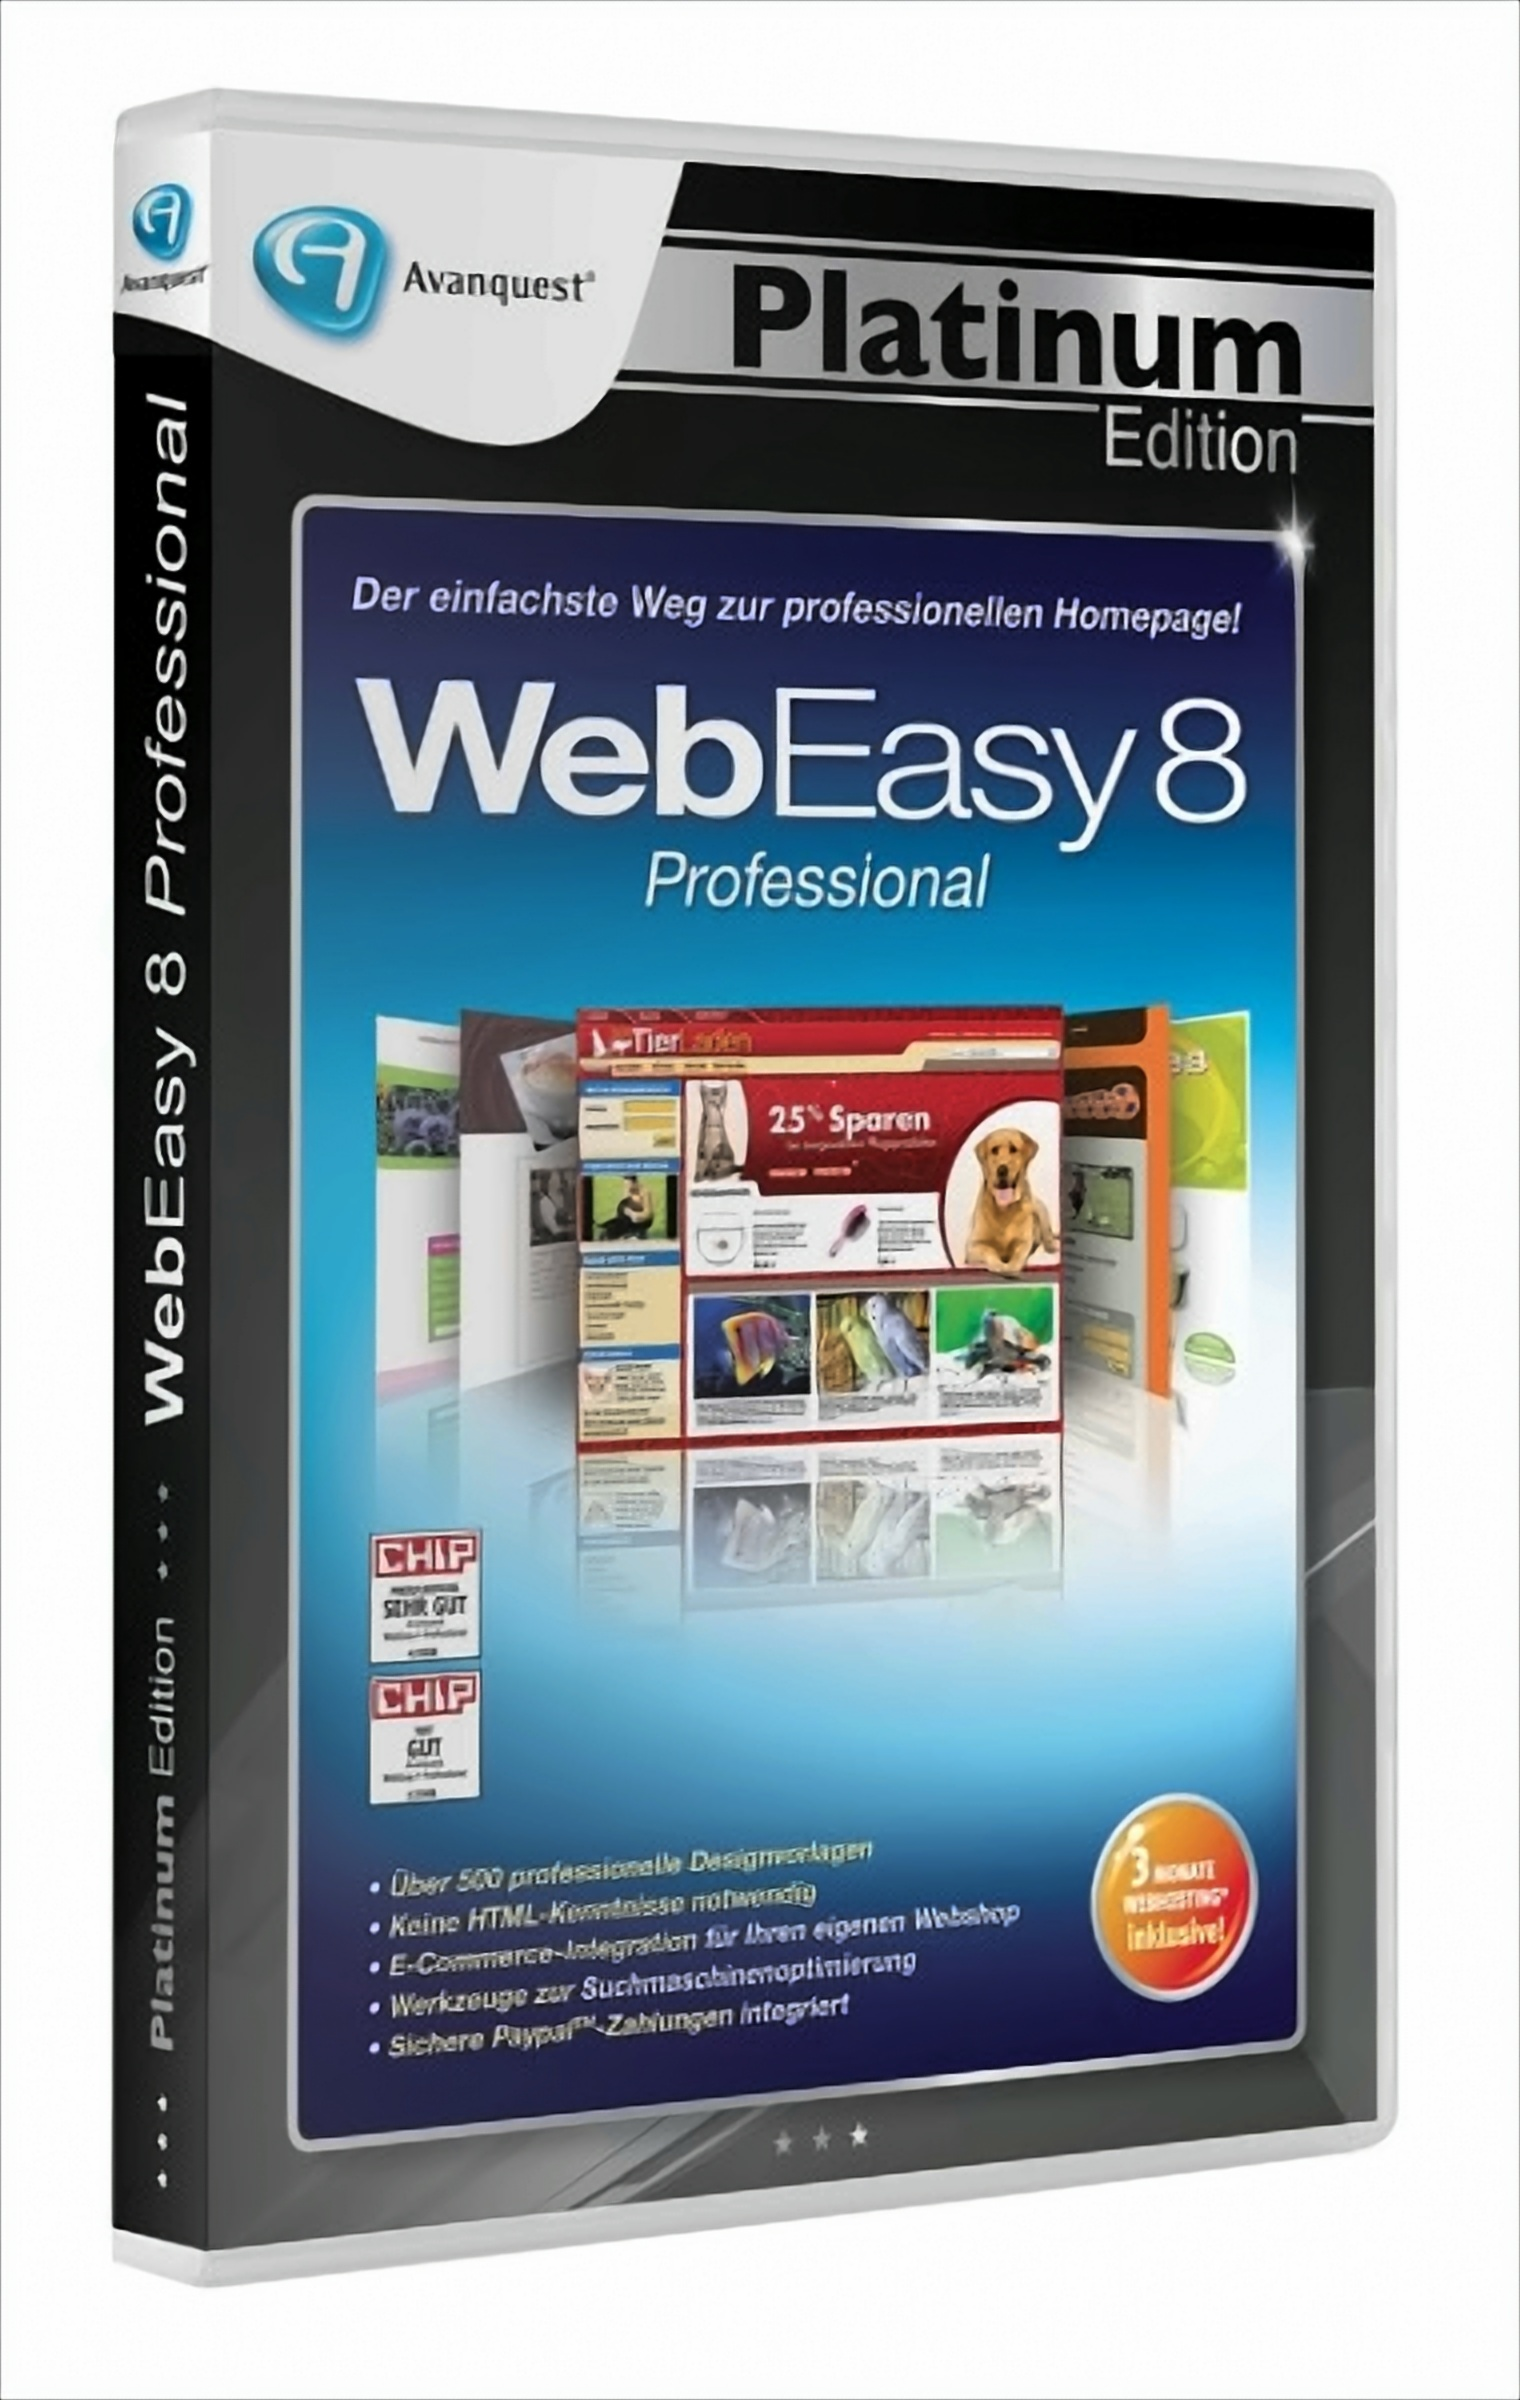 Avanquest Platinum Edition - WebEasy 8 Professional [PC] 